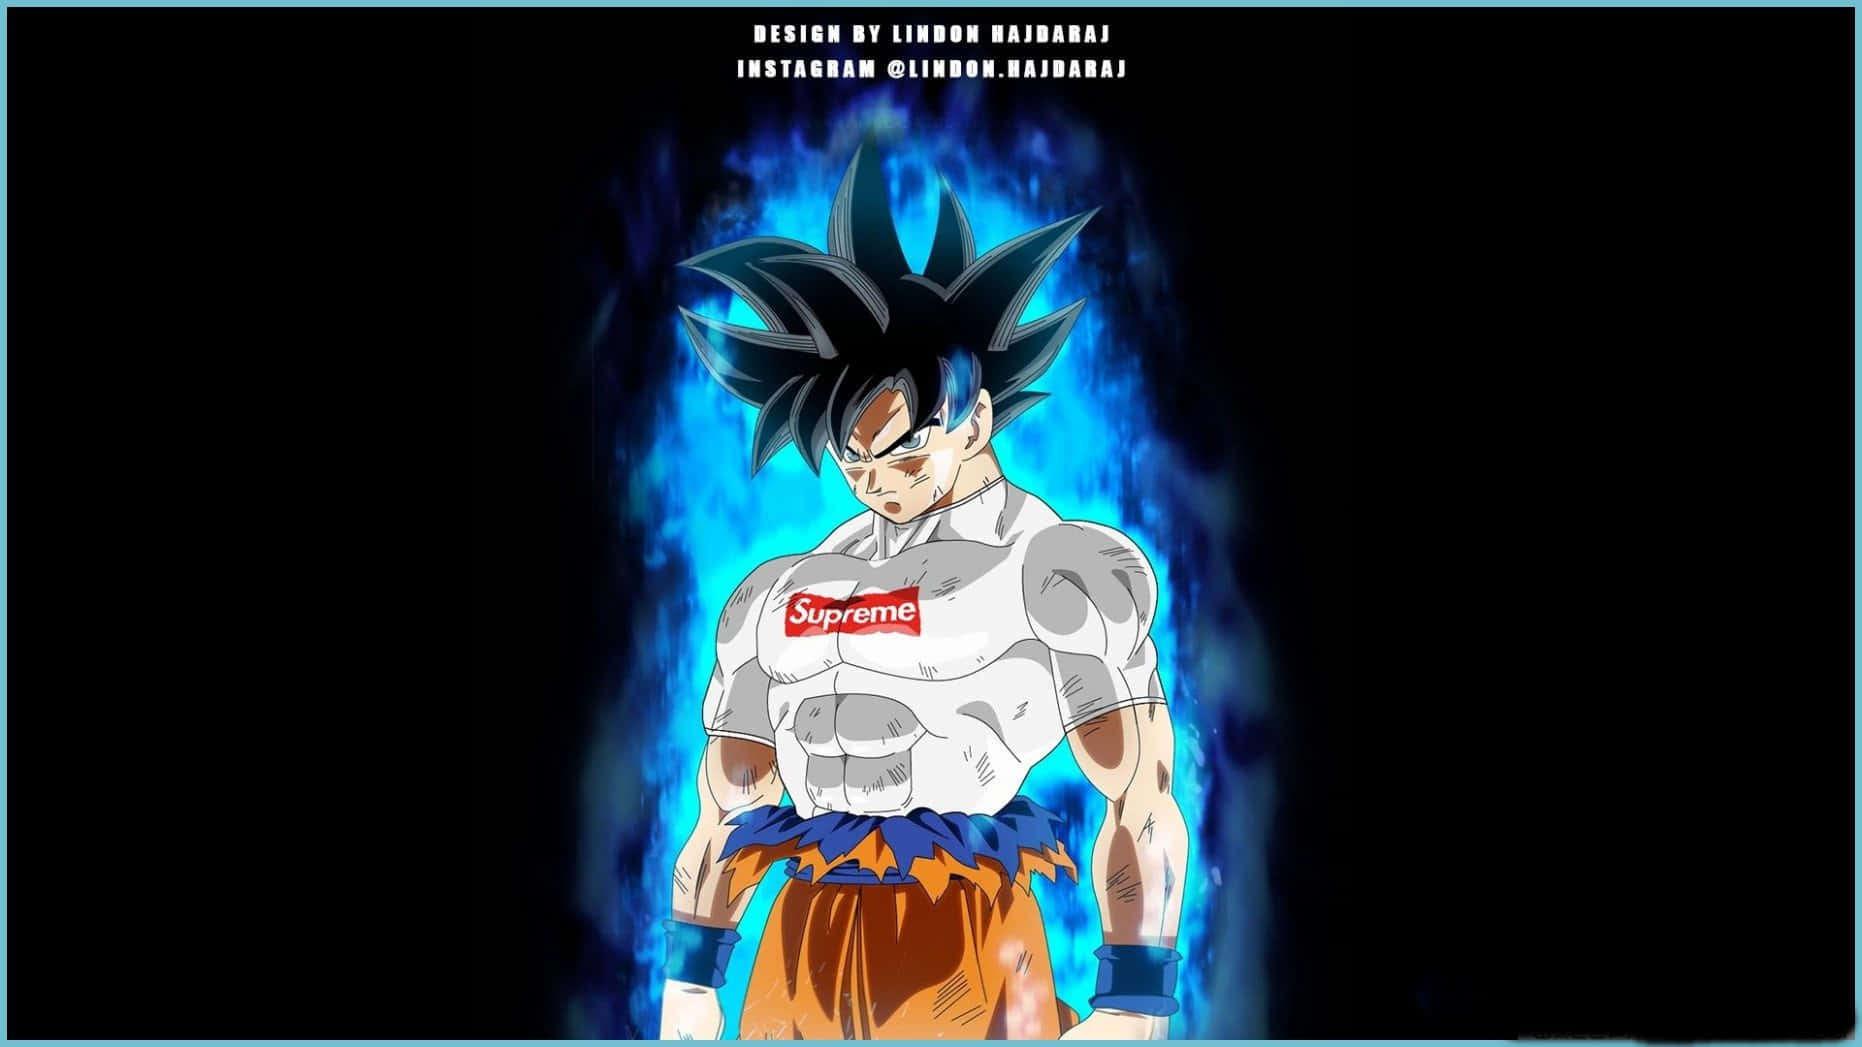 Download The Ultimate Warrior - Goku Supreme Wallpaper